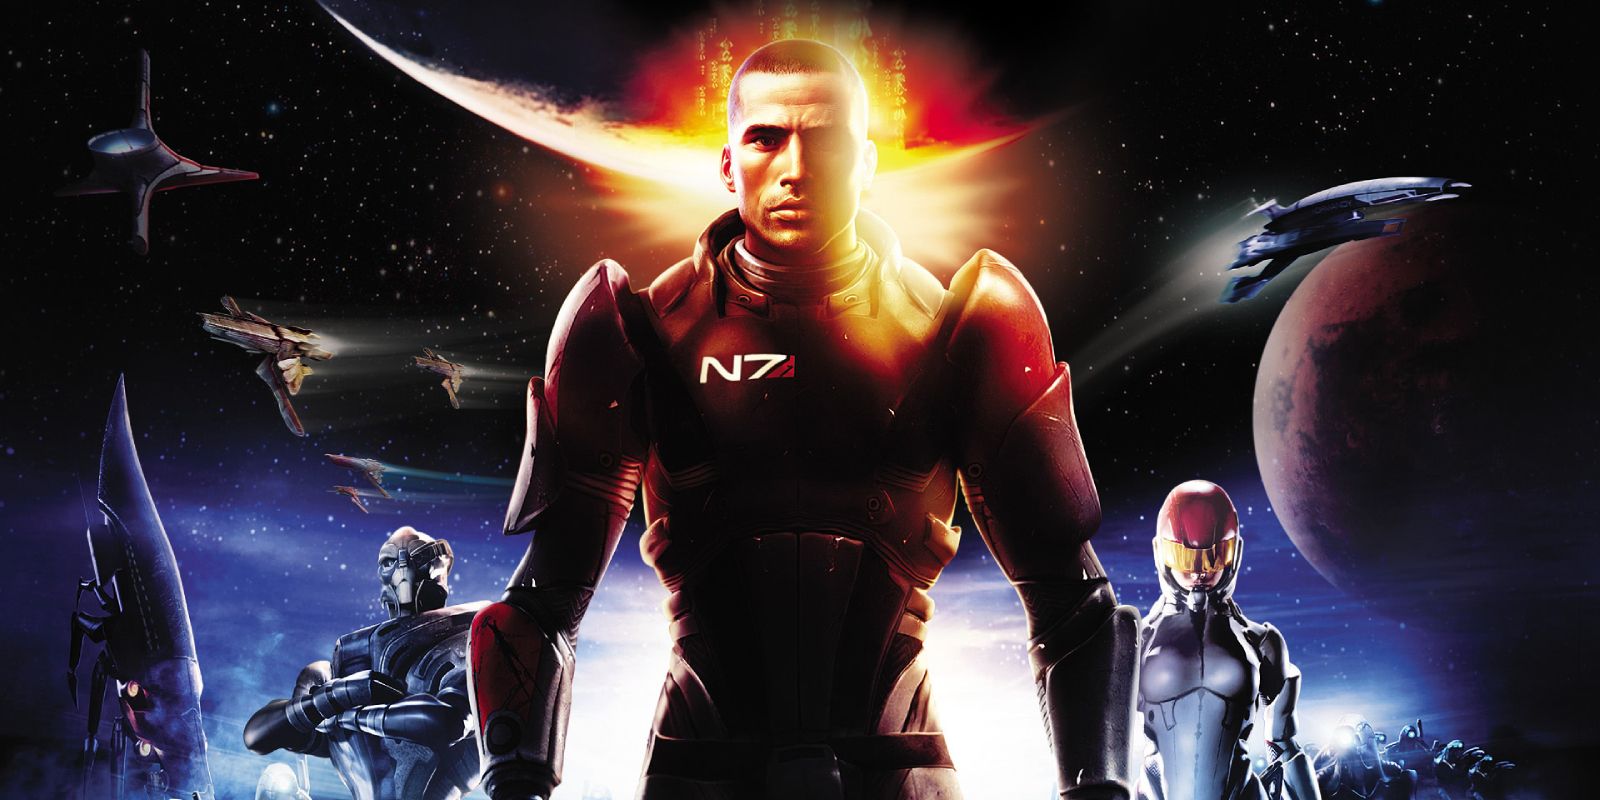 Cover art for Mass Effect 1 